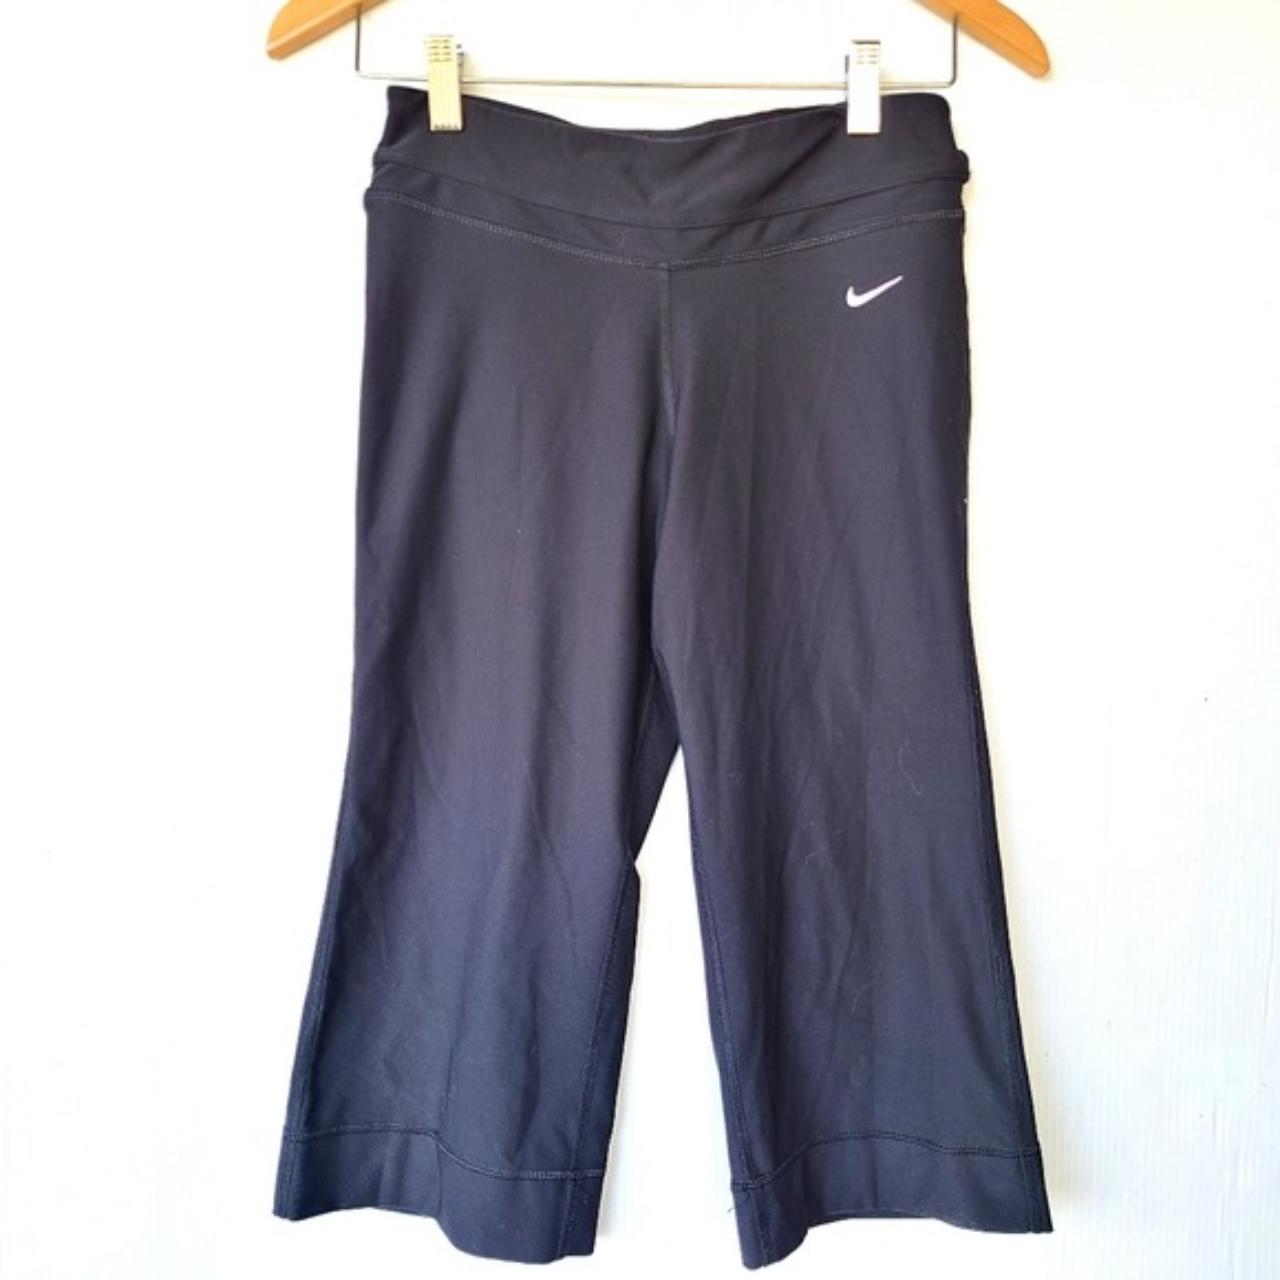 Nike dri fit capri athletic pants XS Waist: 12.5 - Depop